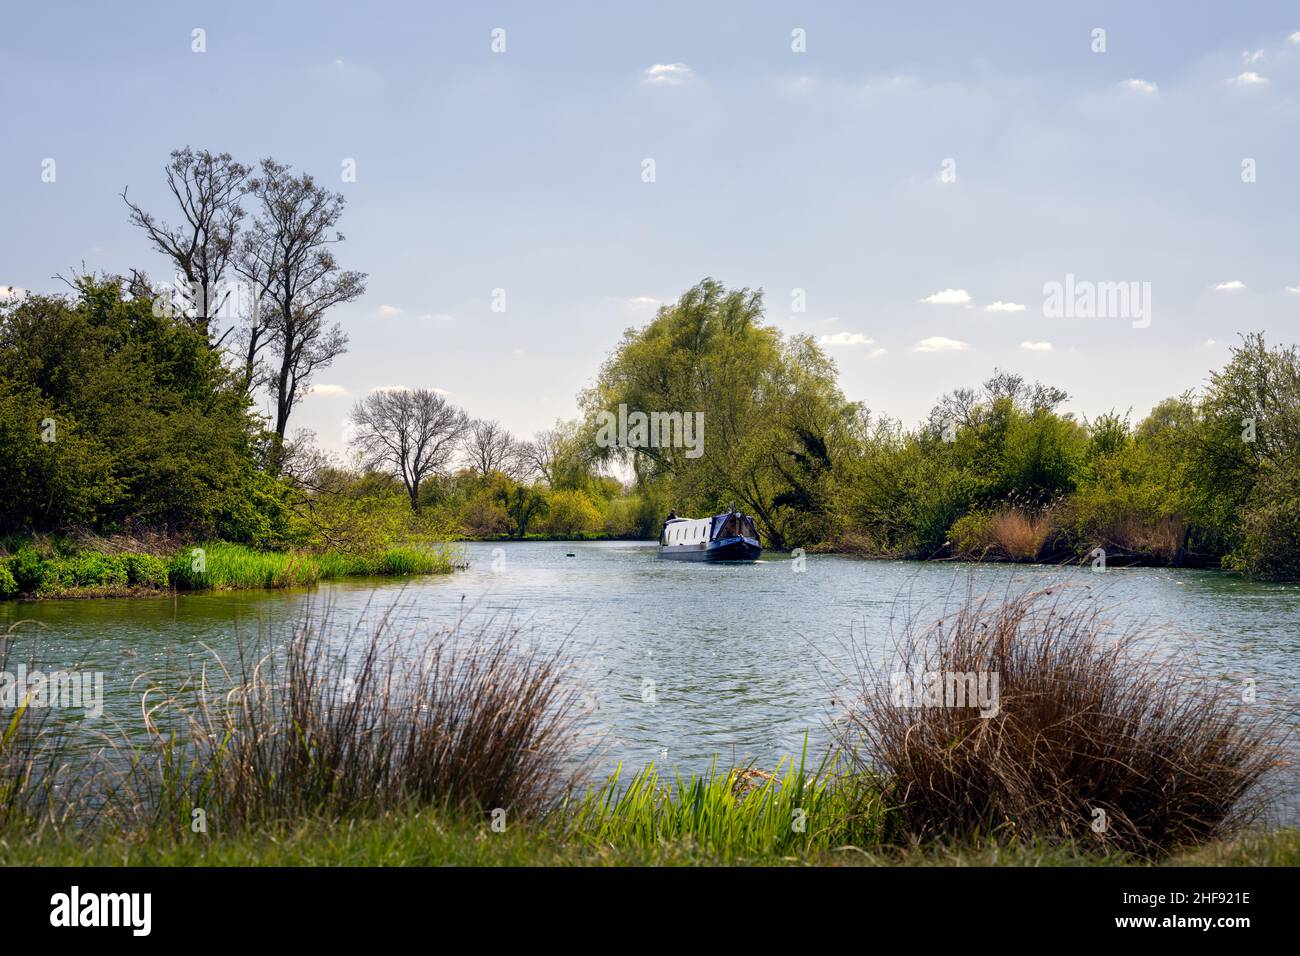 OXFORDSHIRE, ENGLAND - 25th. APRIL 2021: Spaziergang entlang der Themse an einem sonnigen Frühlingstag, ein Flachboot Stockfoto